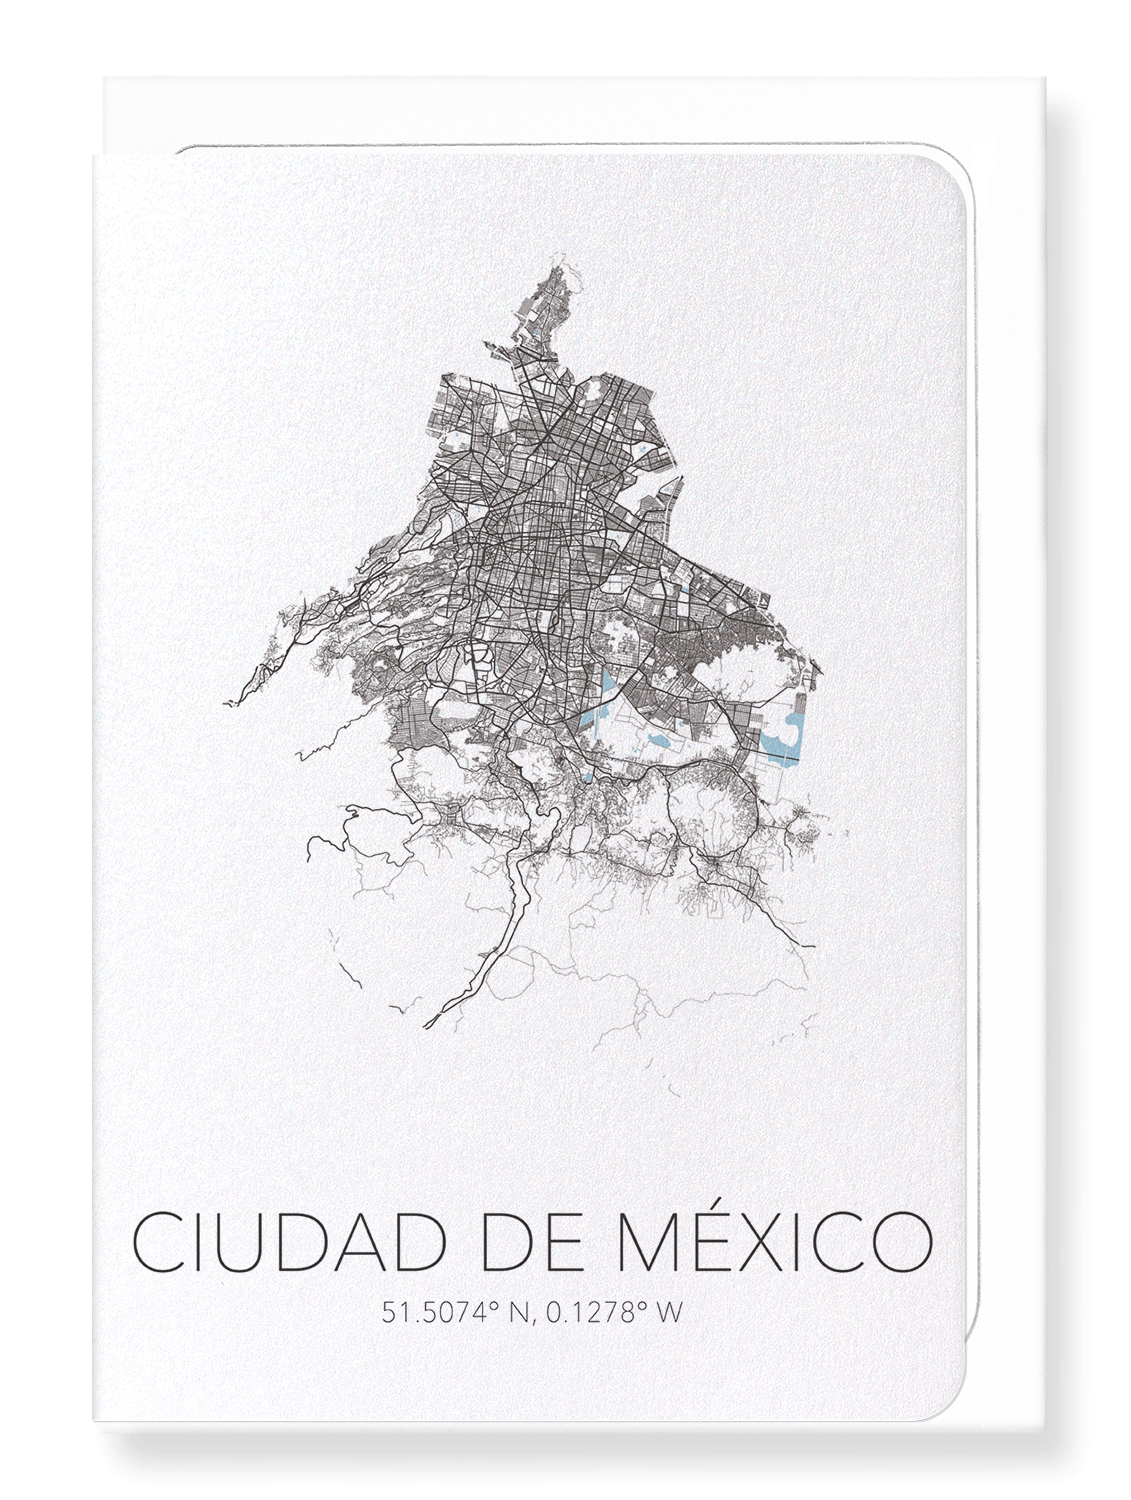 MEXICO CITY CUTOUT: Map Cutout Greeting Card